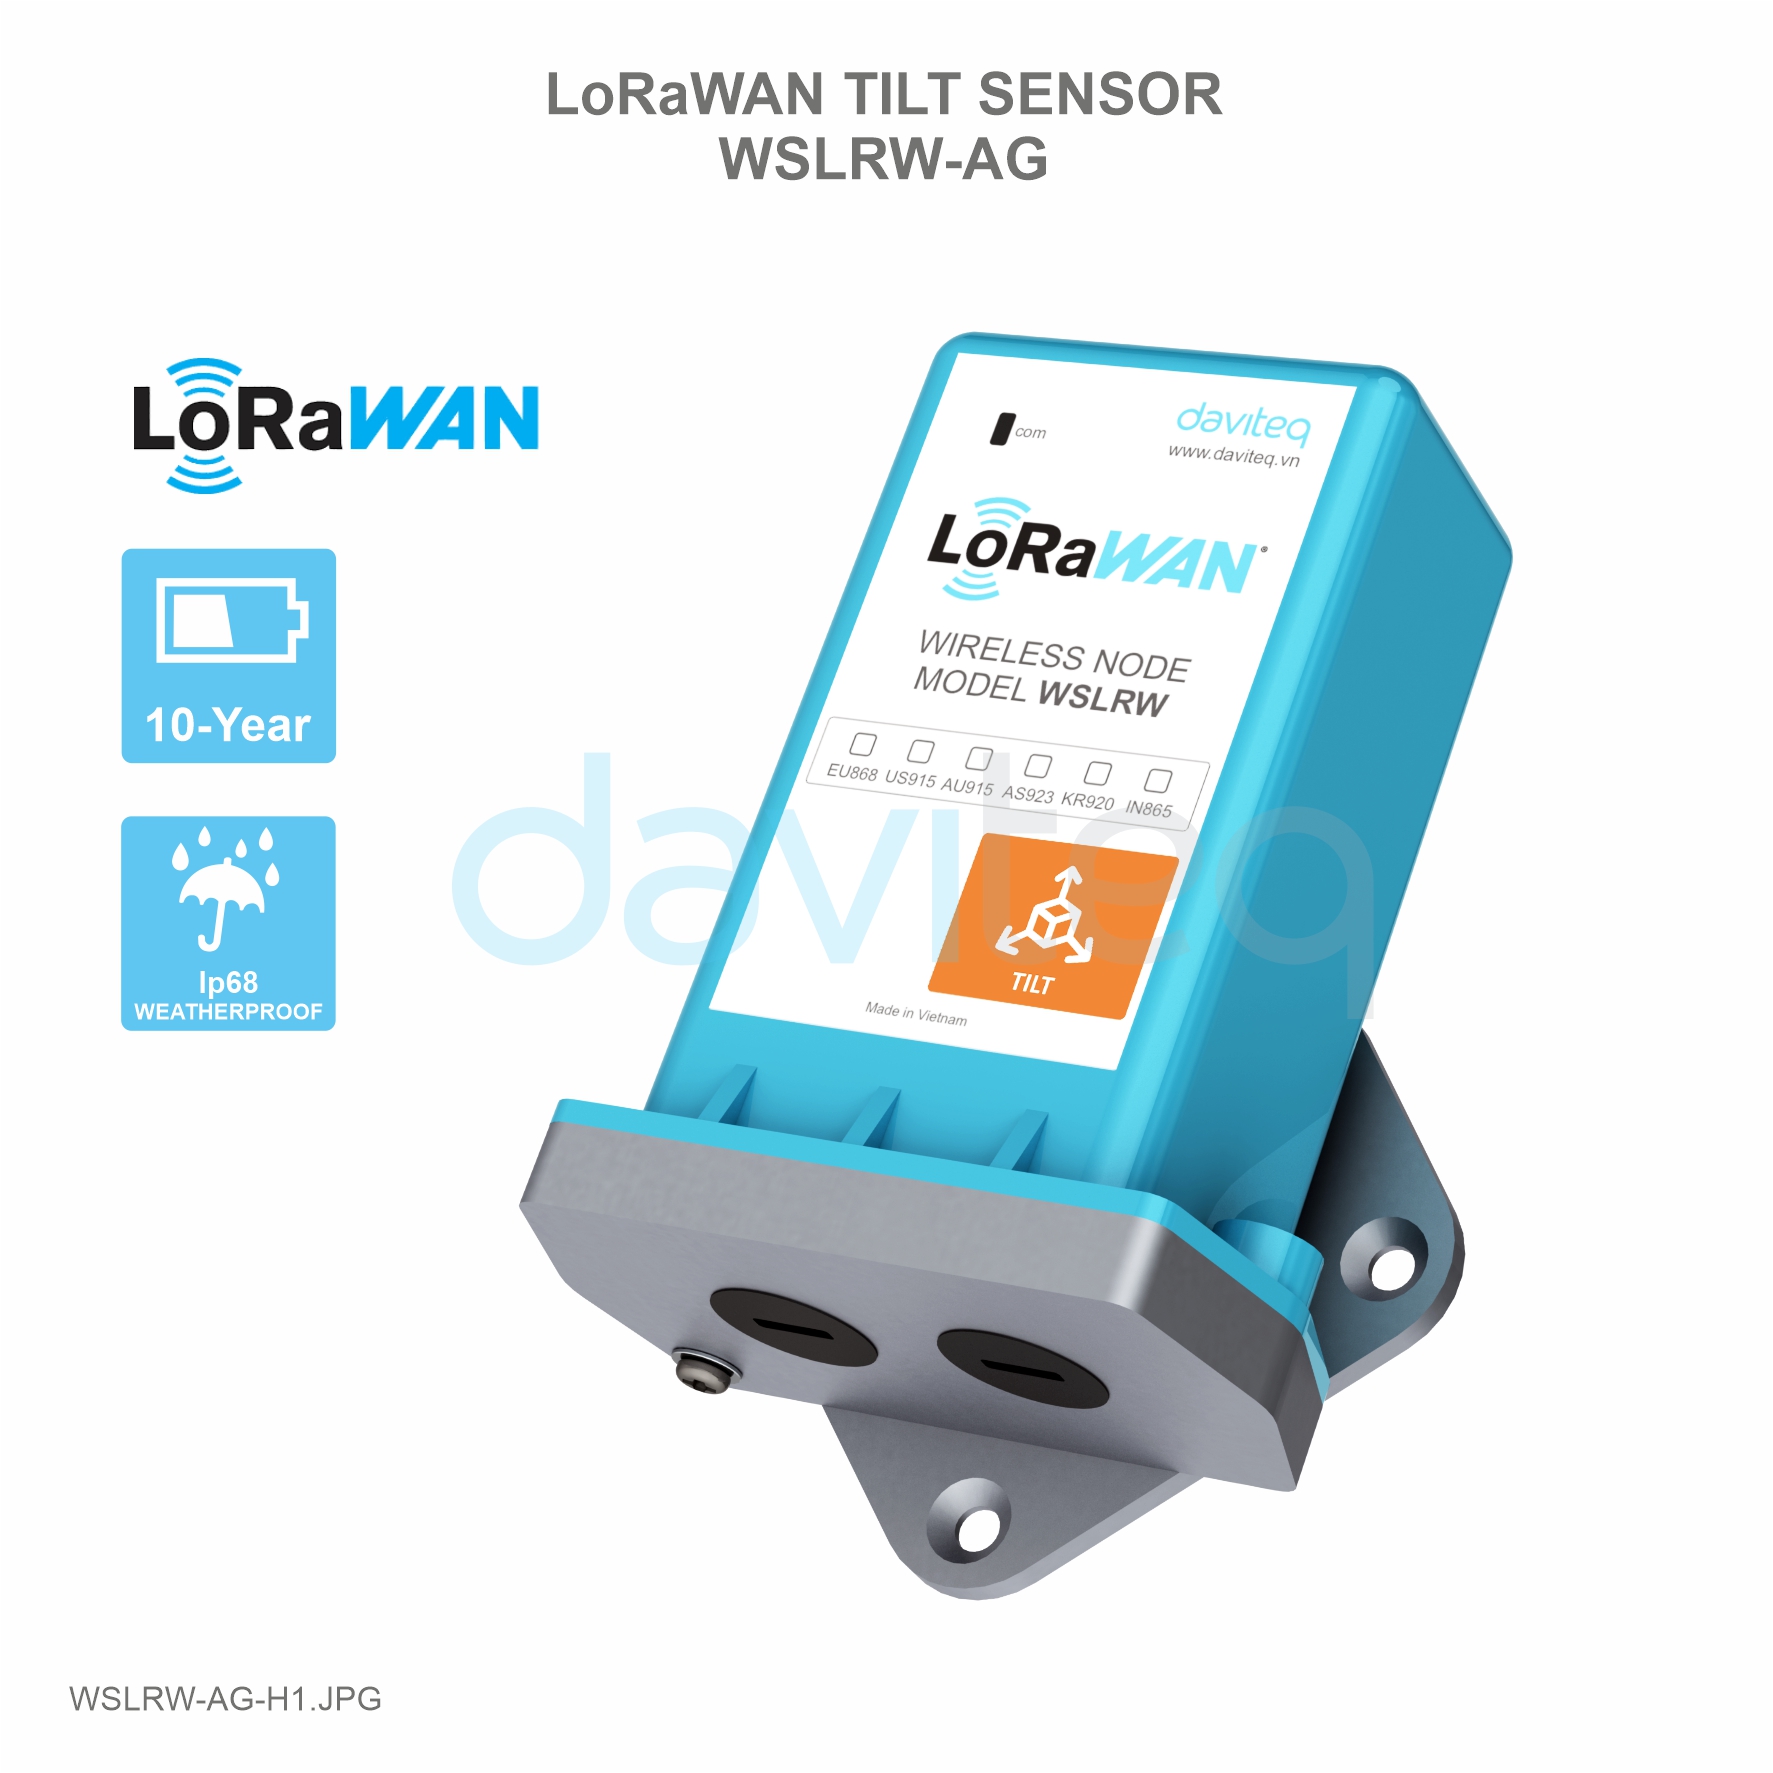 LoRaWAN Tilt Sensor